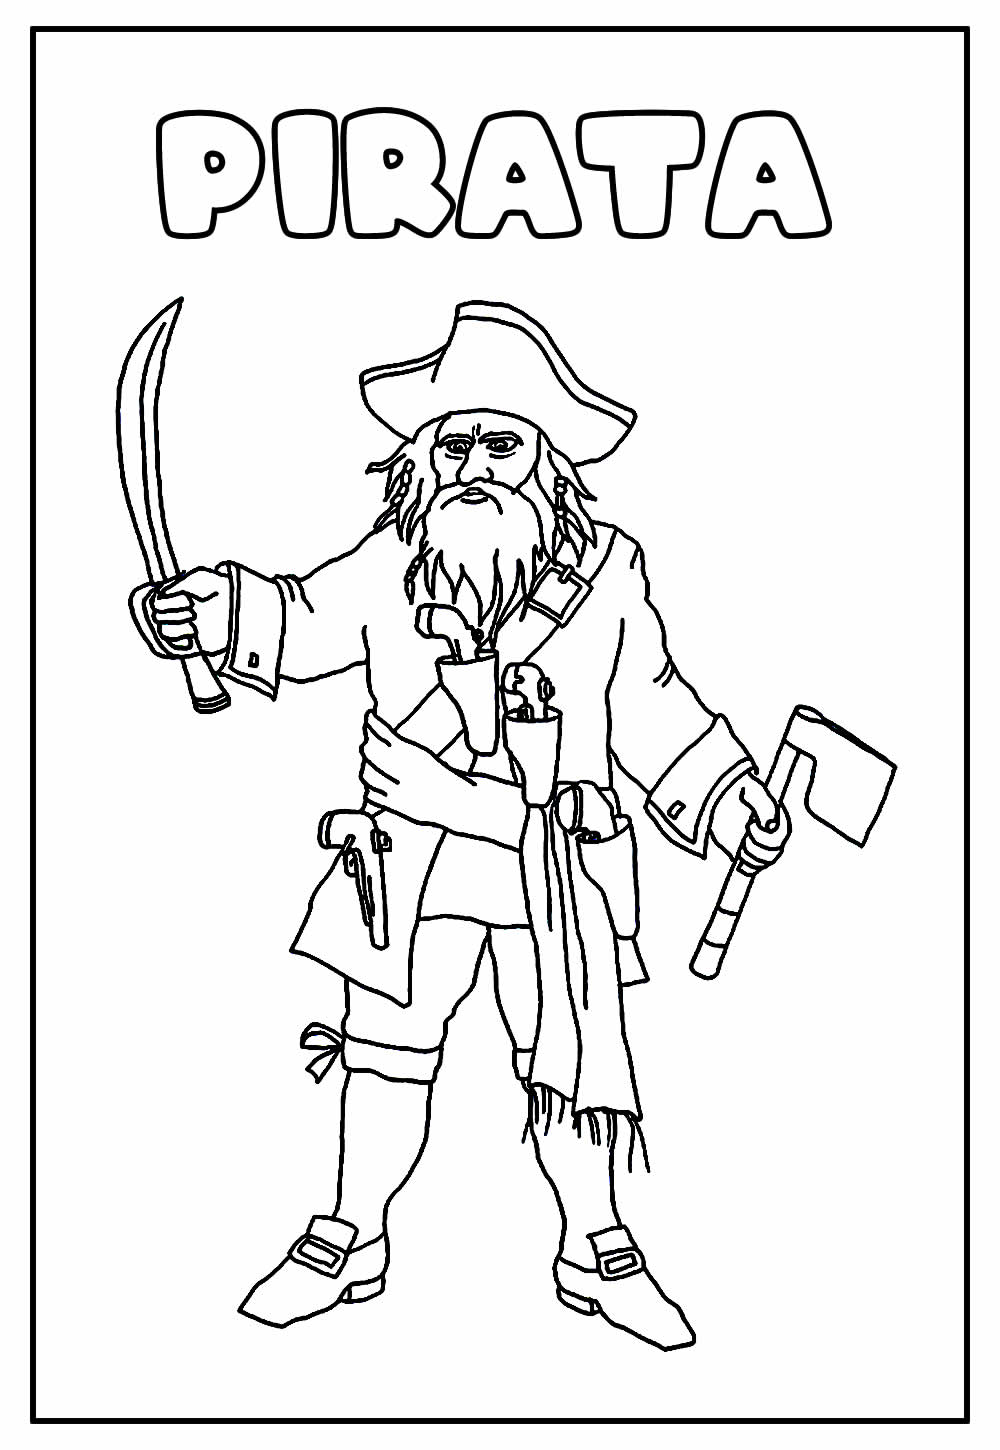 Desenho Educativo de Pirata para pintar e colorir